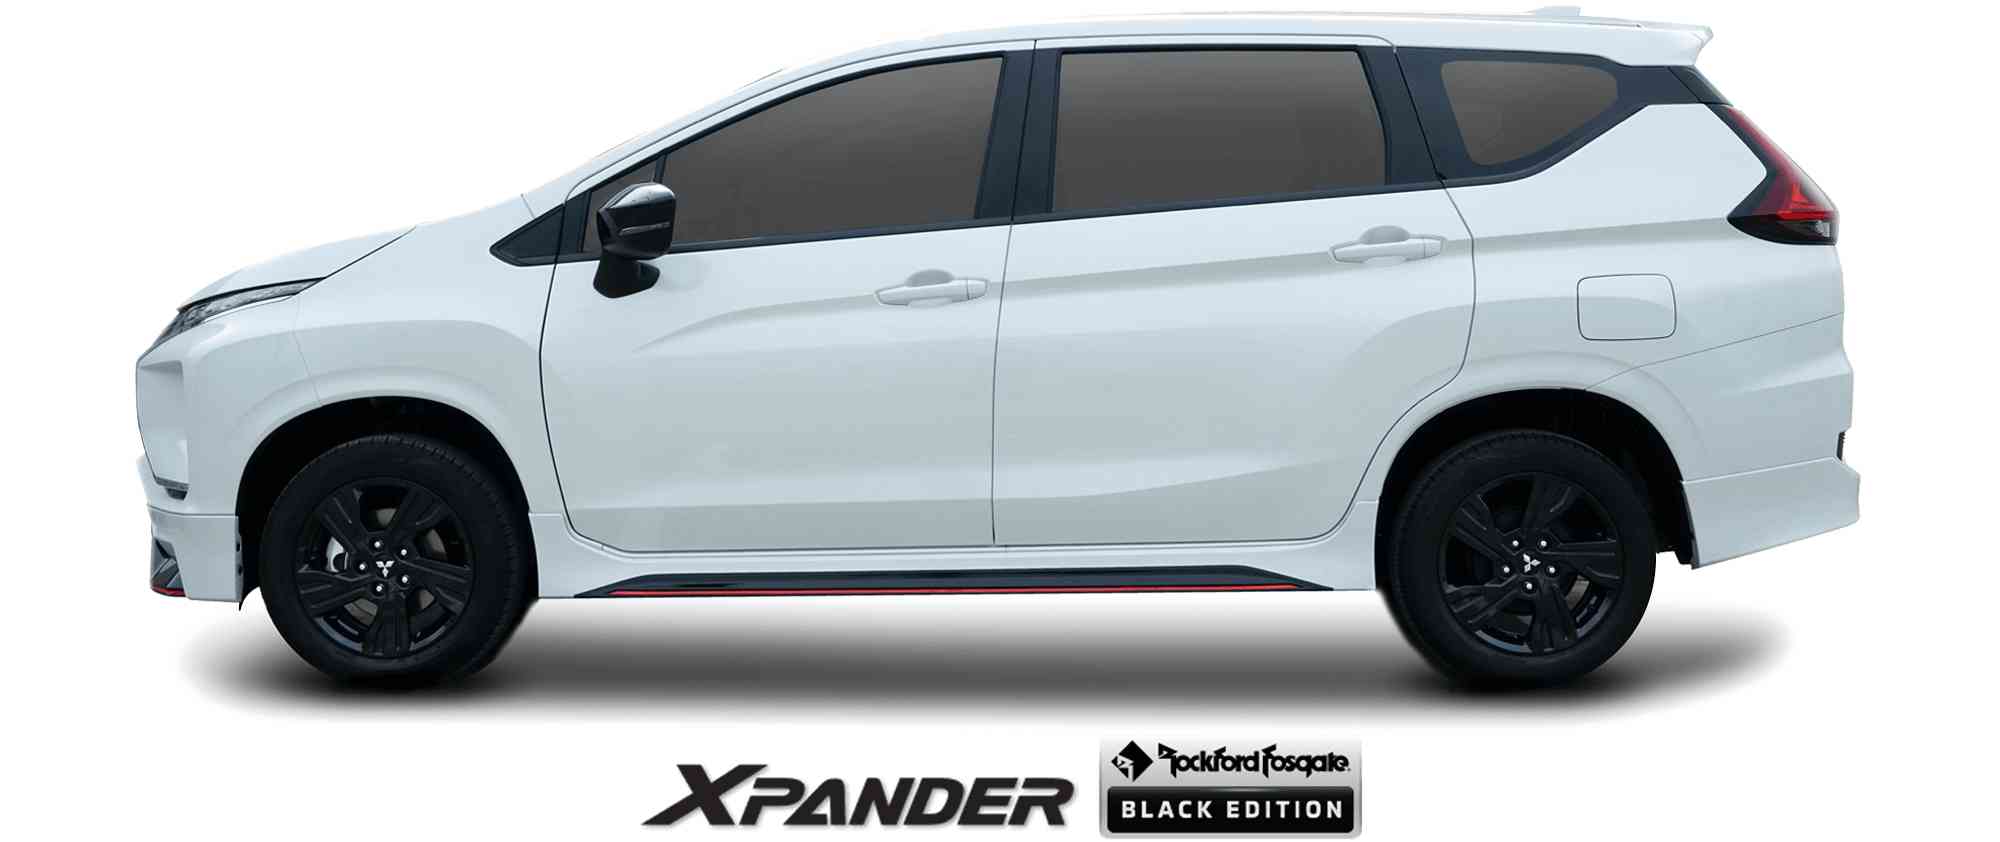 Harga Mobil Xpander Makassar. Xpander Black Edition Makassar